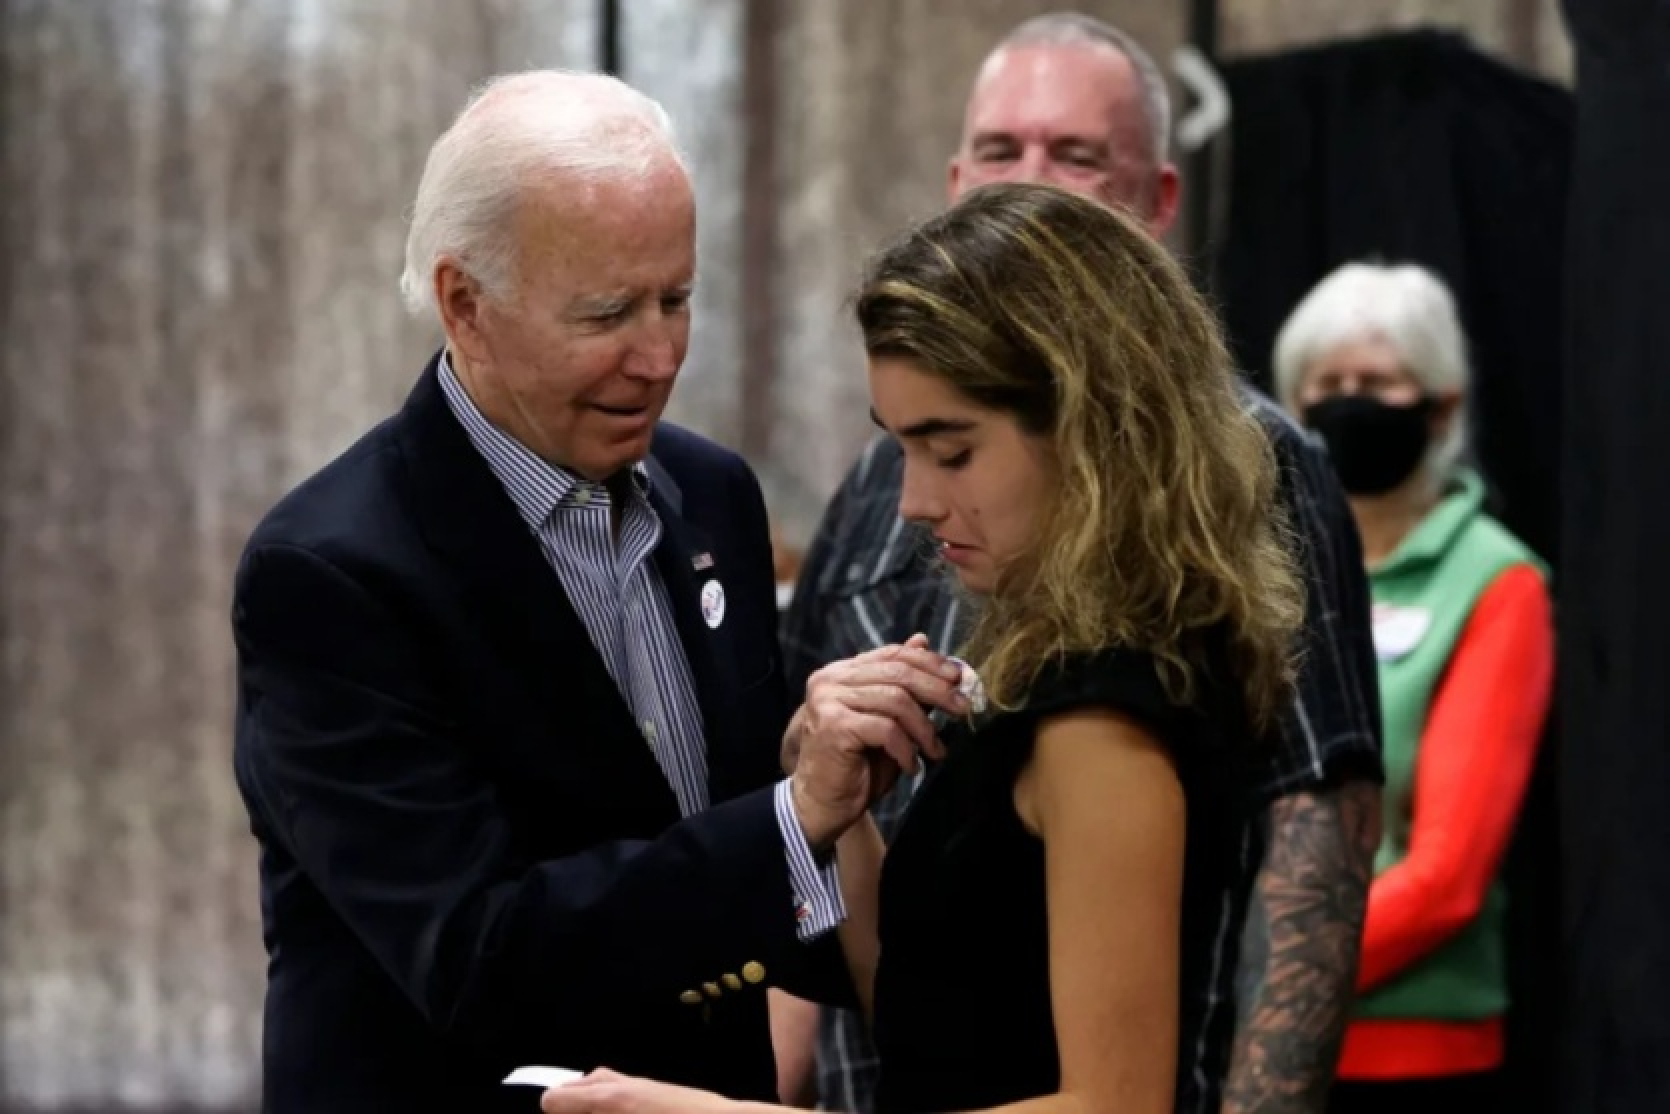 Joe Biden's dipfake showing him "touching" his granddaughter's breasts will be left on Facebook